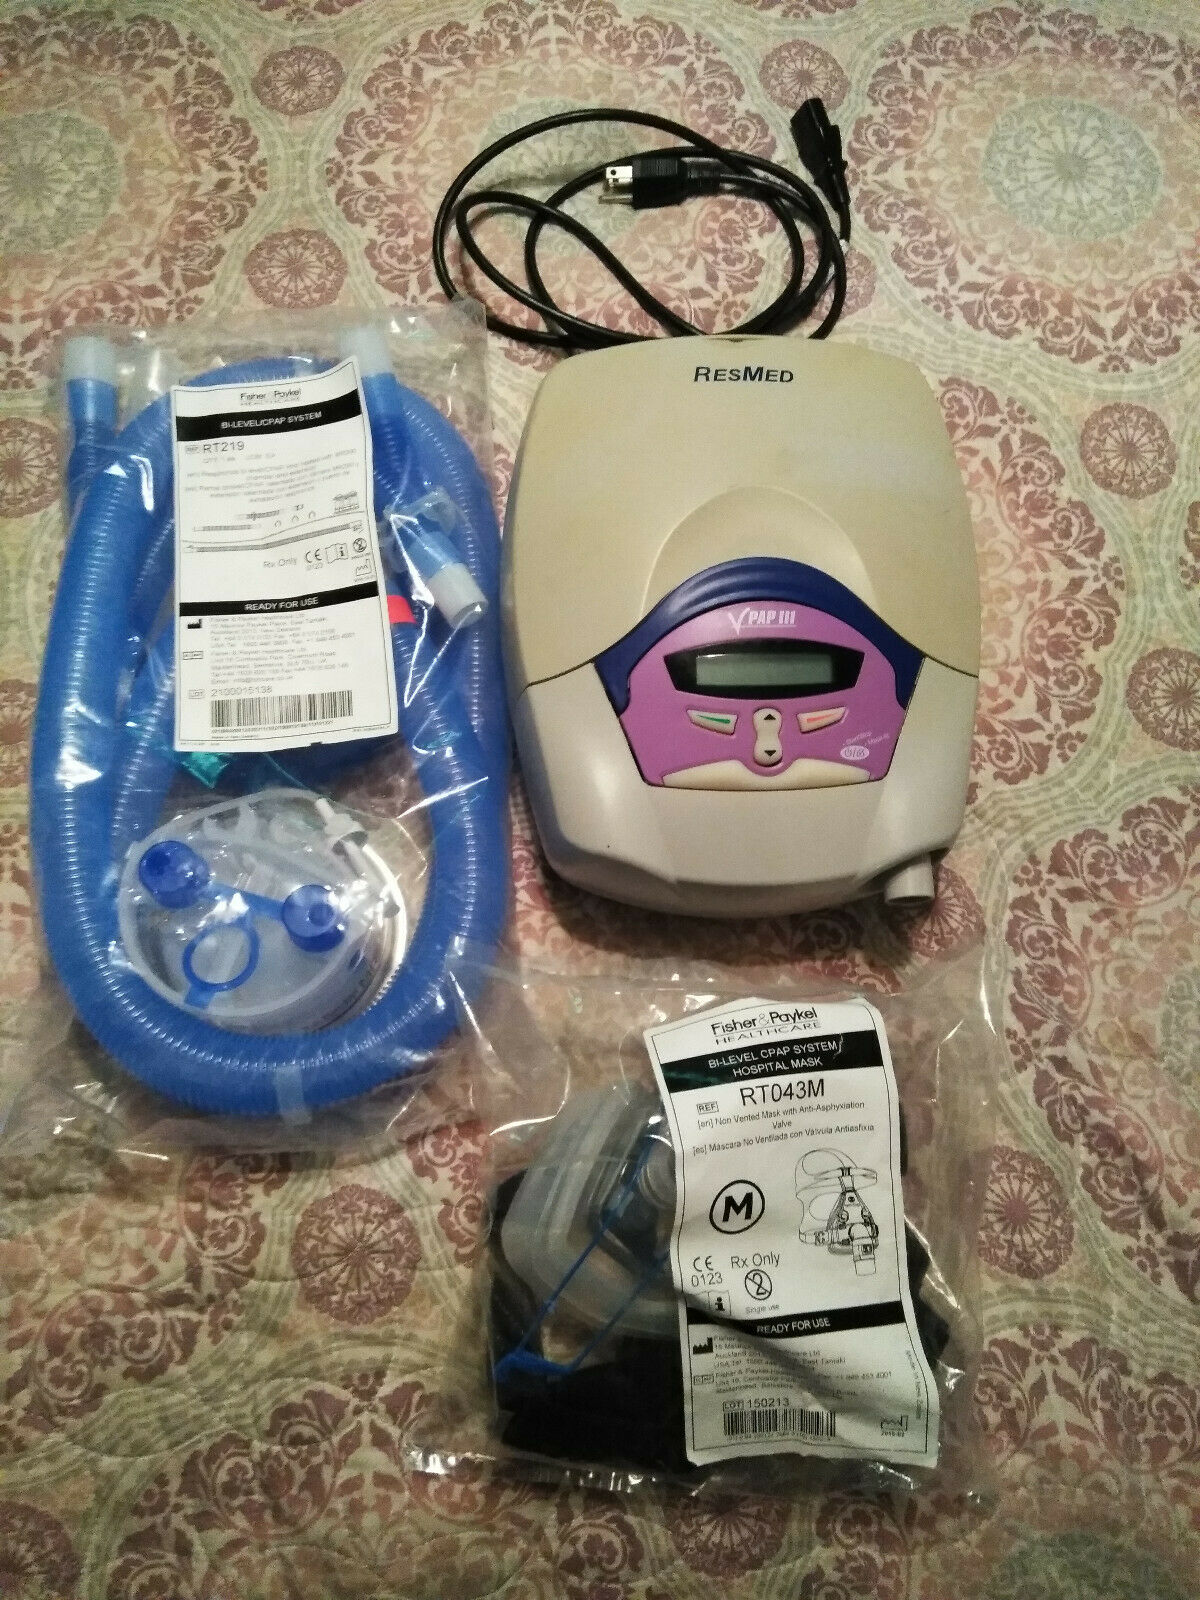 Ventilator Breathing Machine